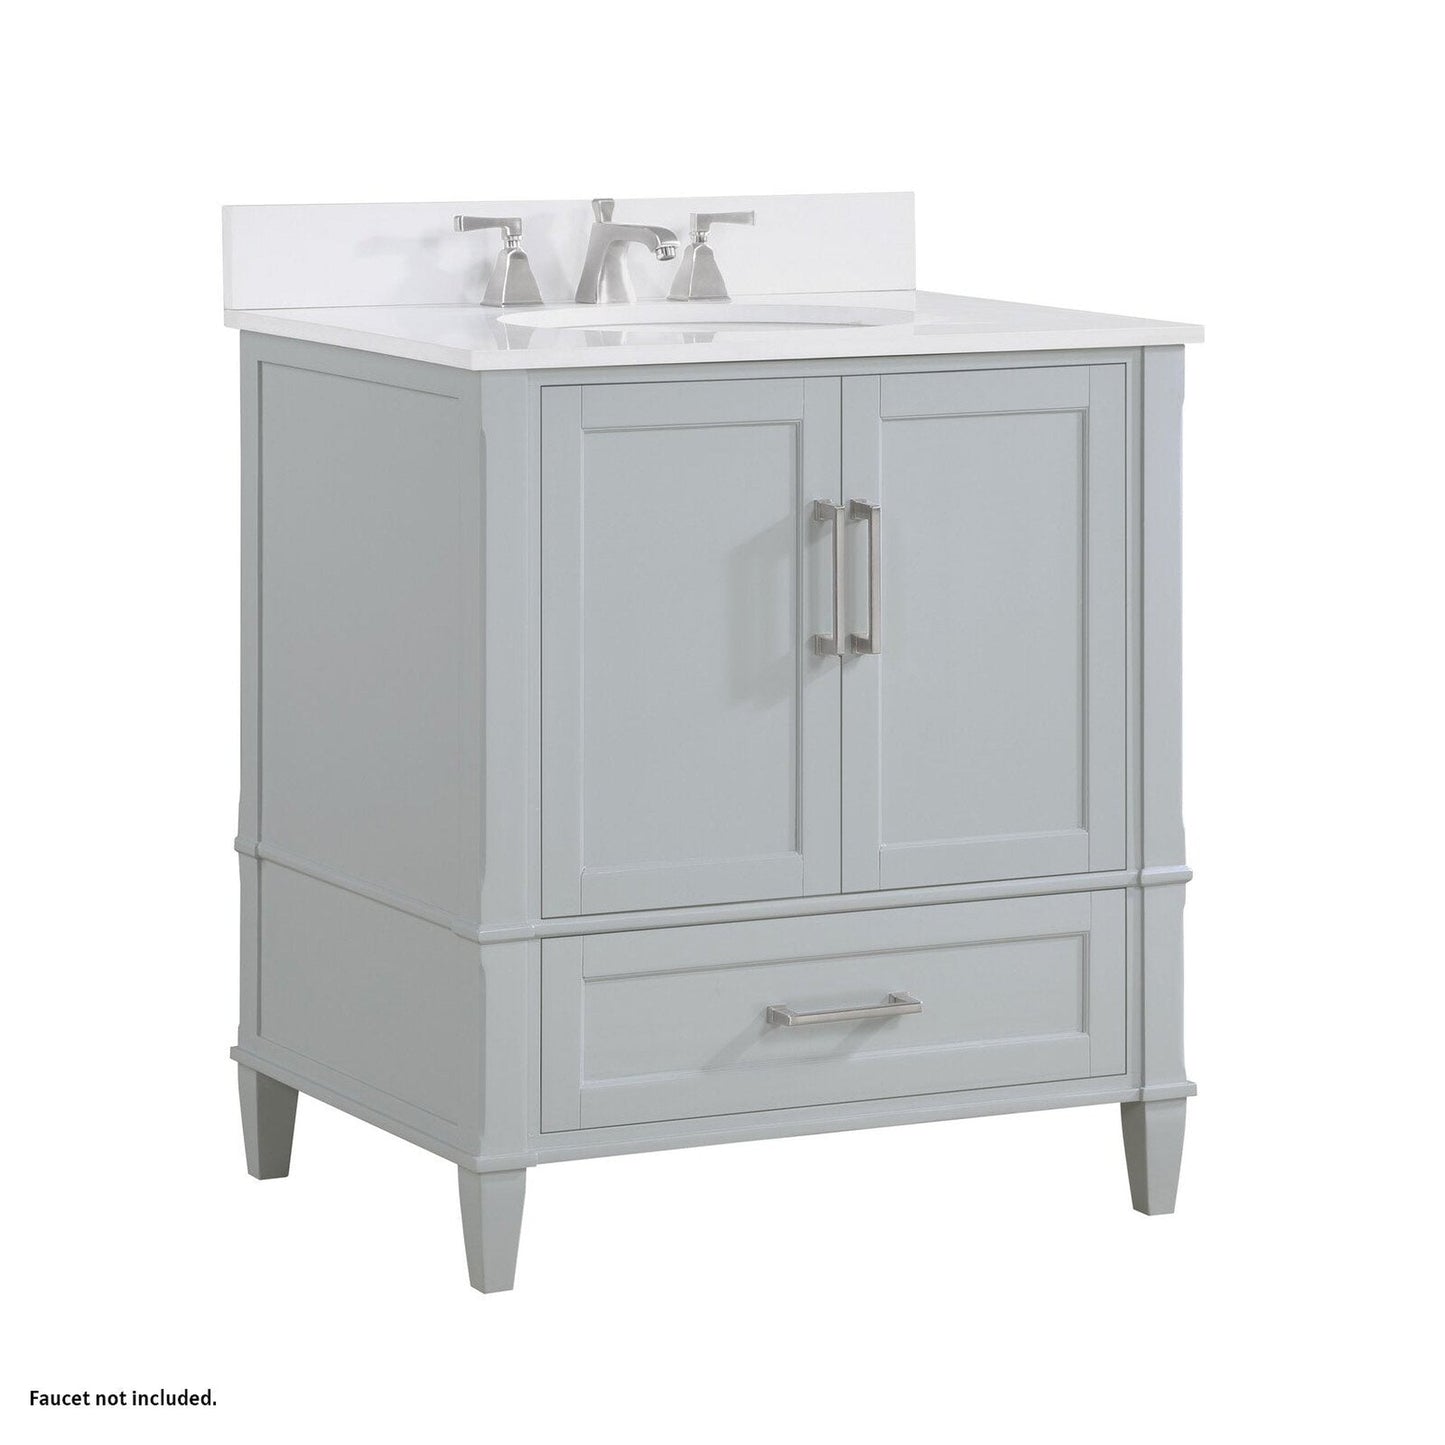 Bemma Design Montauk 30" Morning Fog Gray Solid Wood Freestanding Bathroom Vanity With Single 3-Hole White Quartz Vanity Top, Oval Undermount Sink, and Backsplash